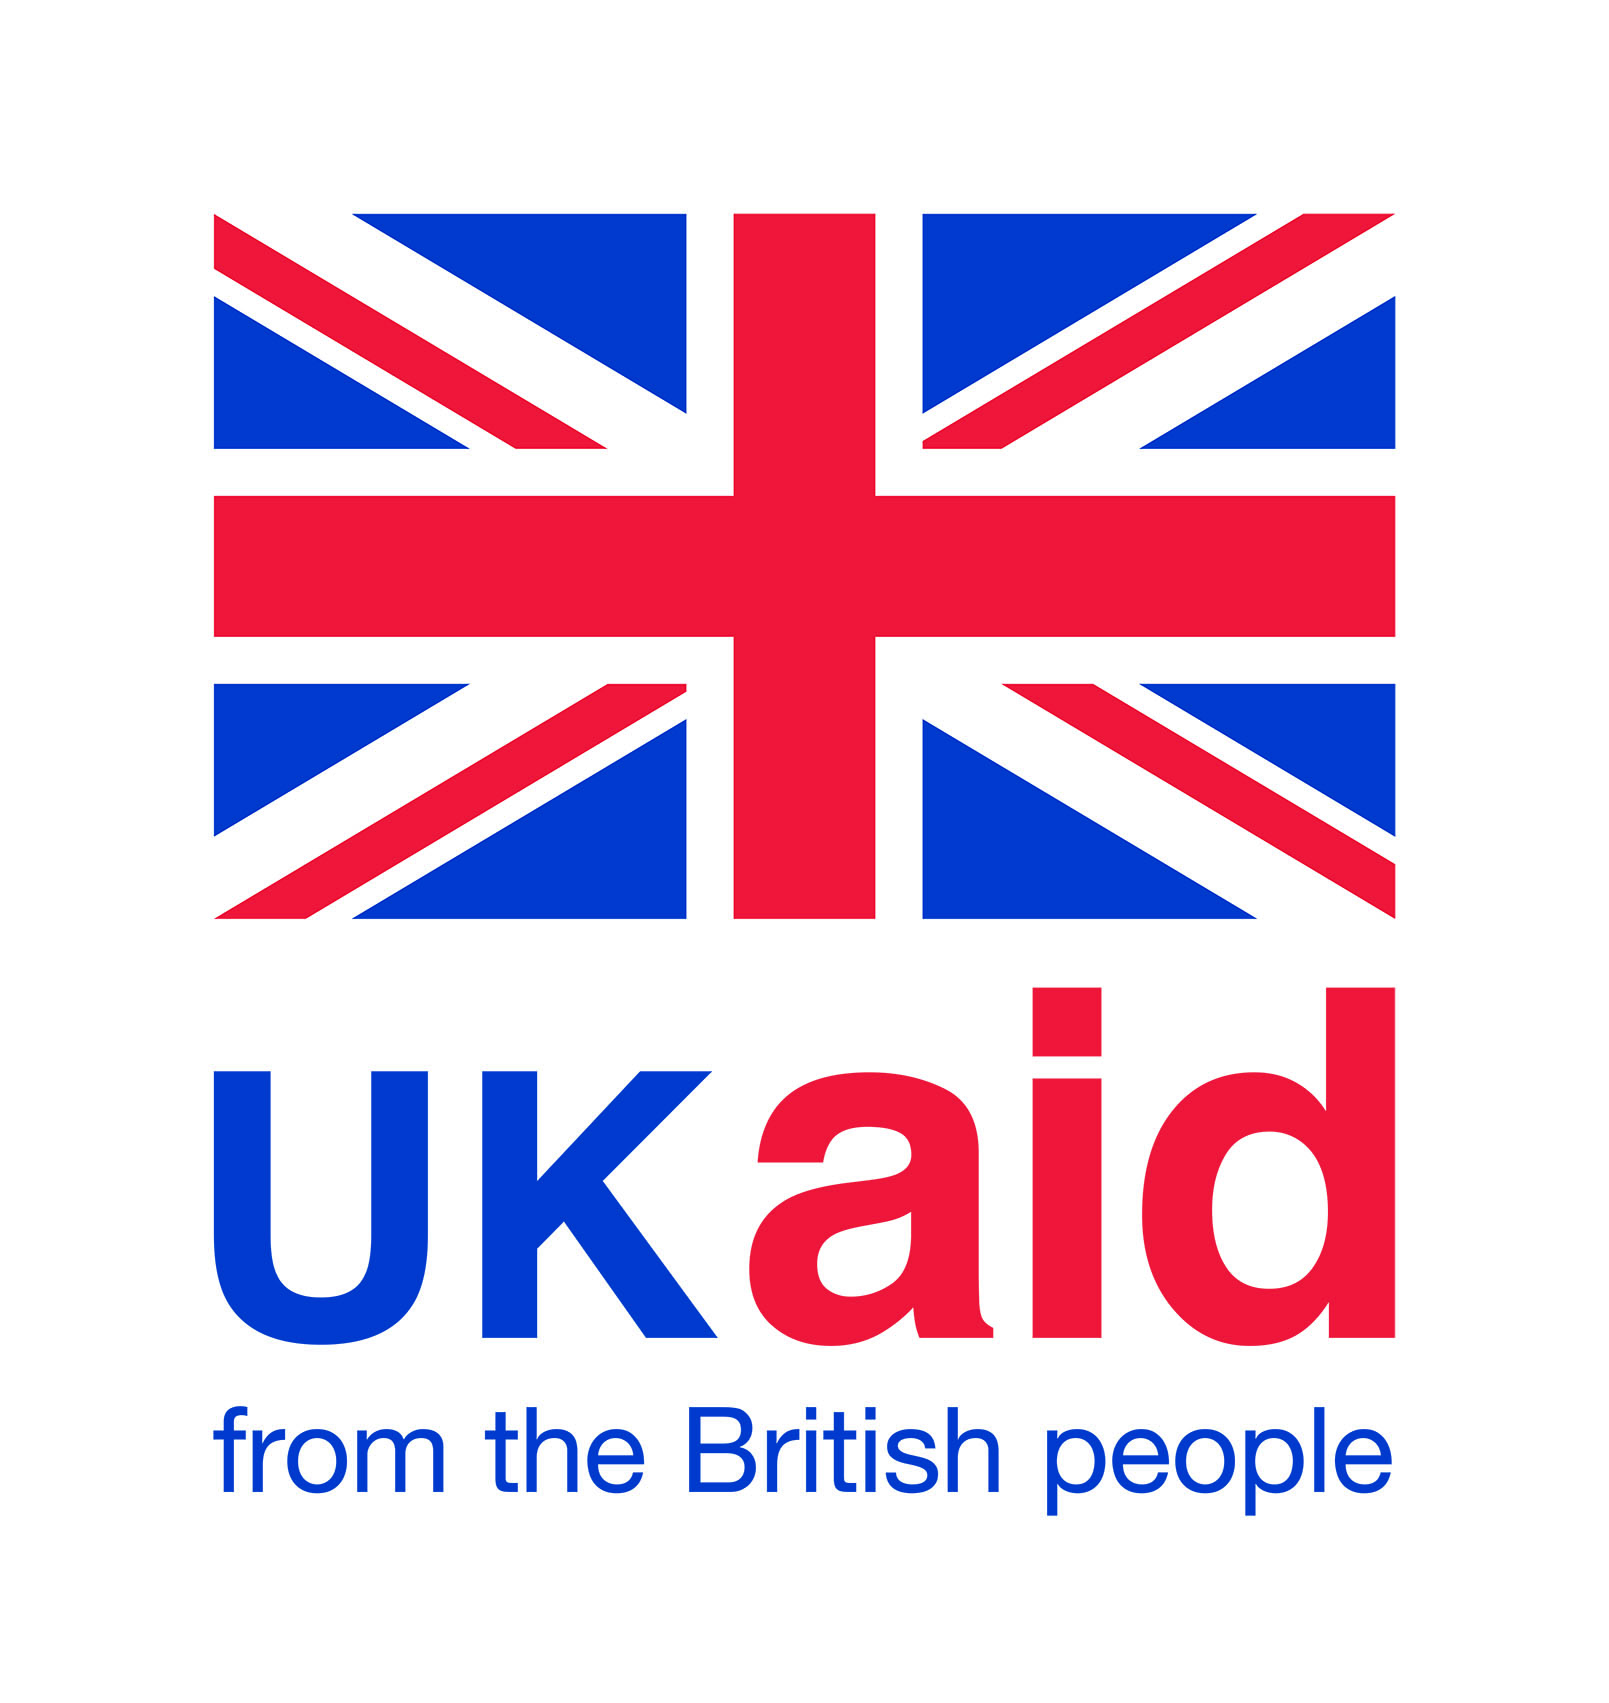 UK AID - Standard - 4C.jpg